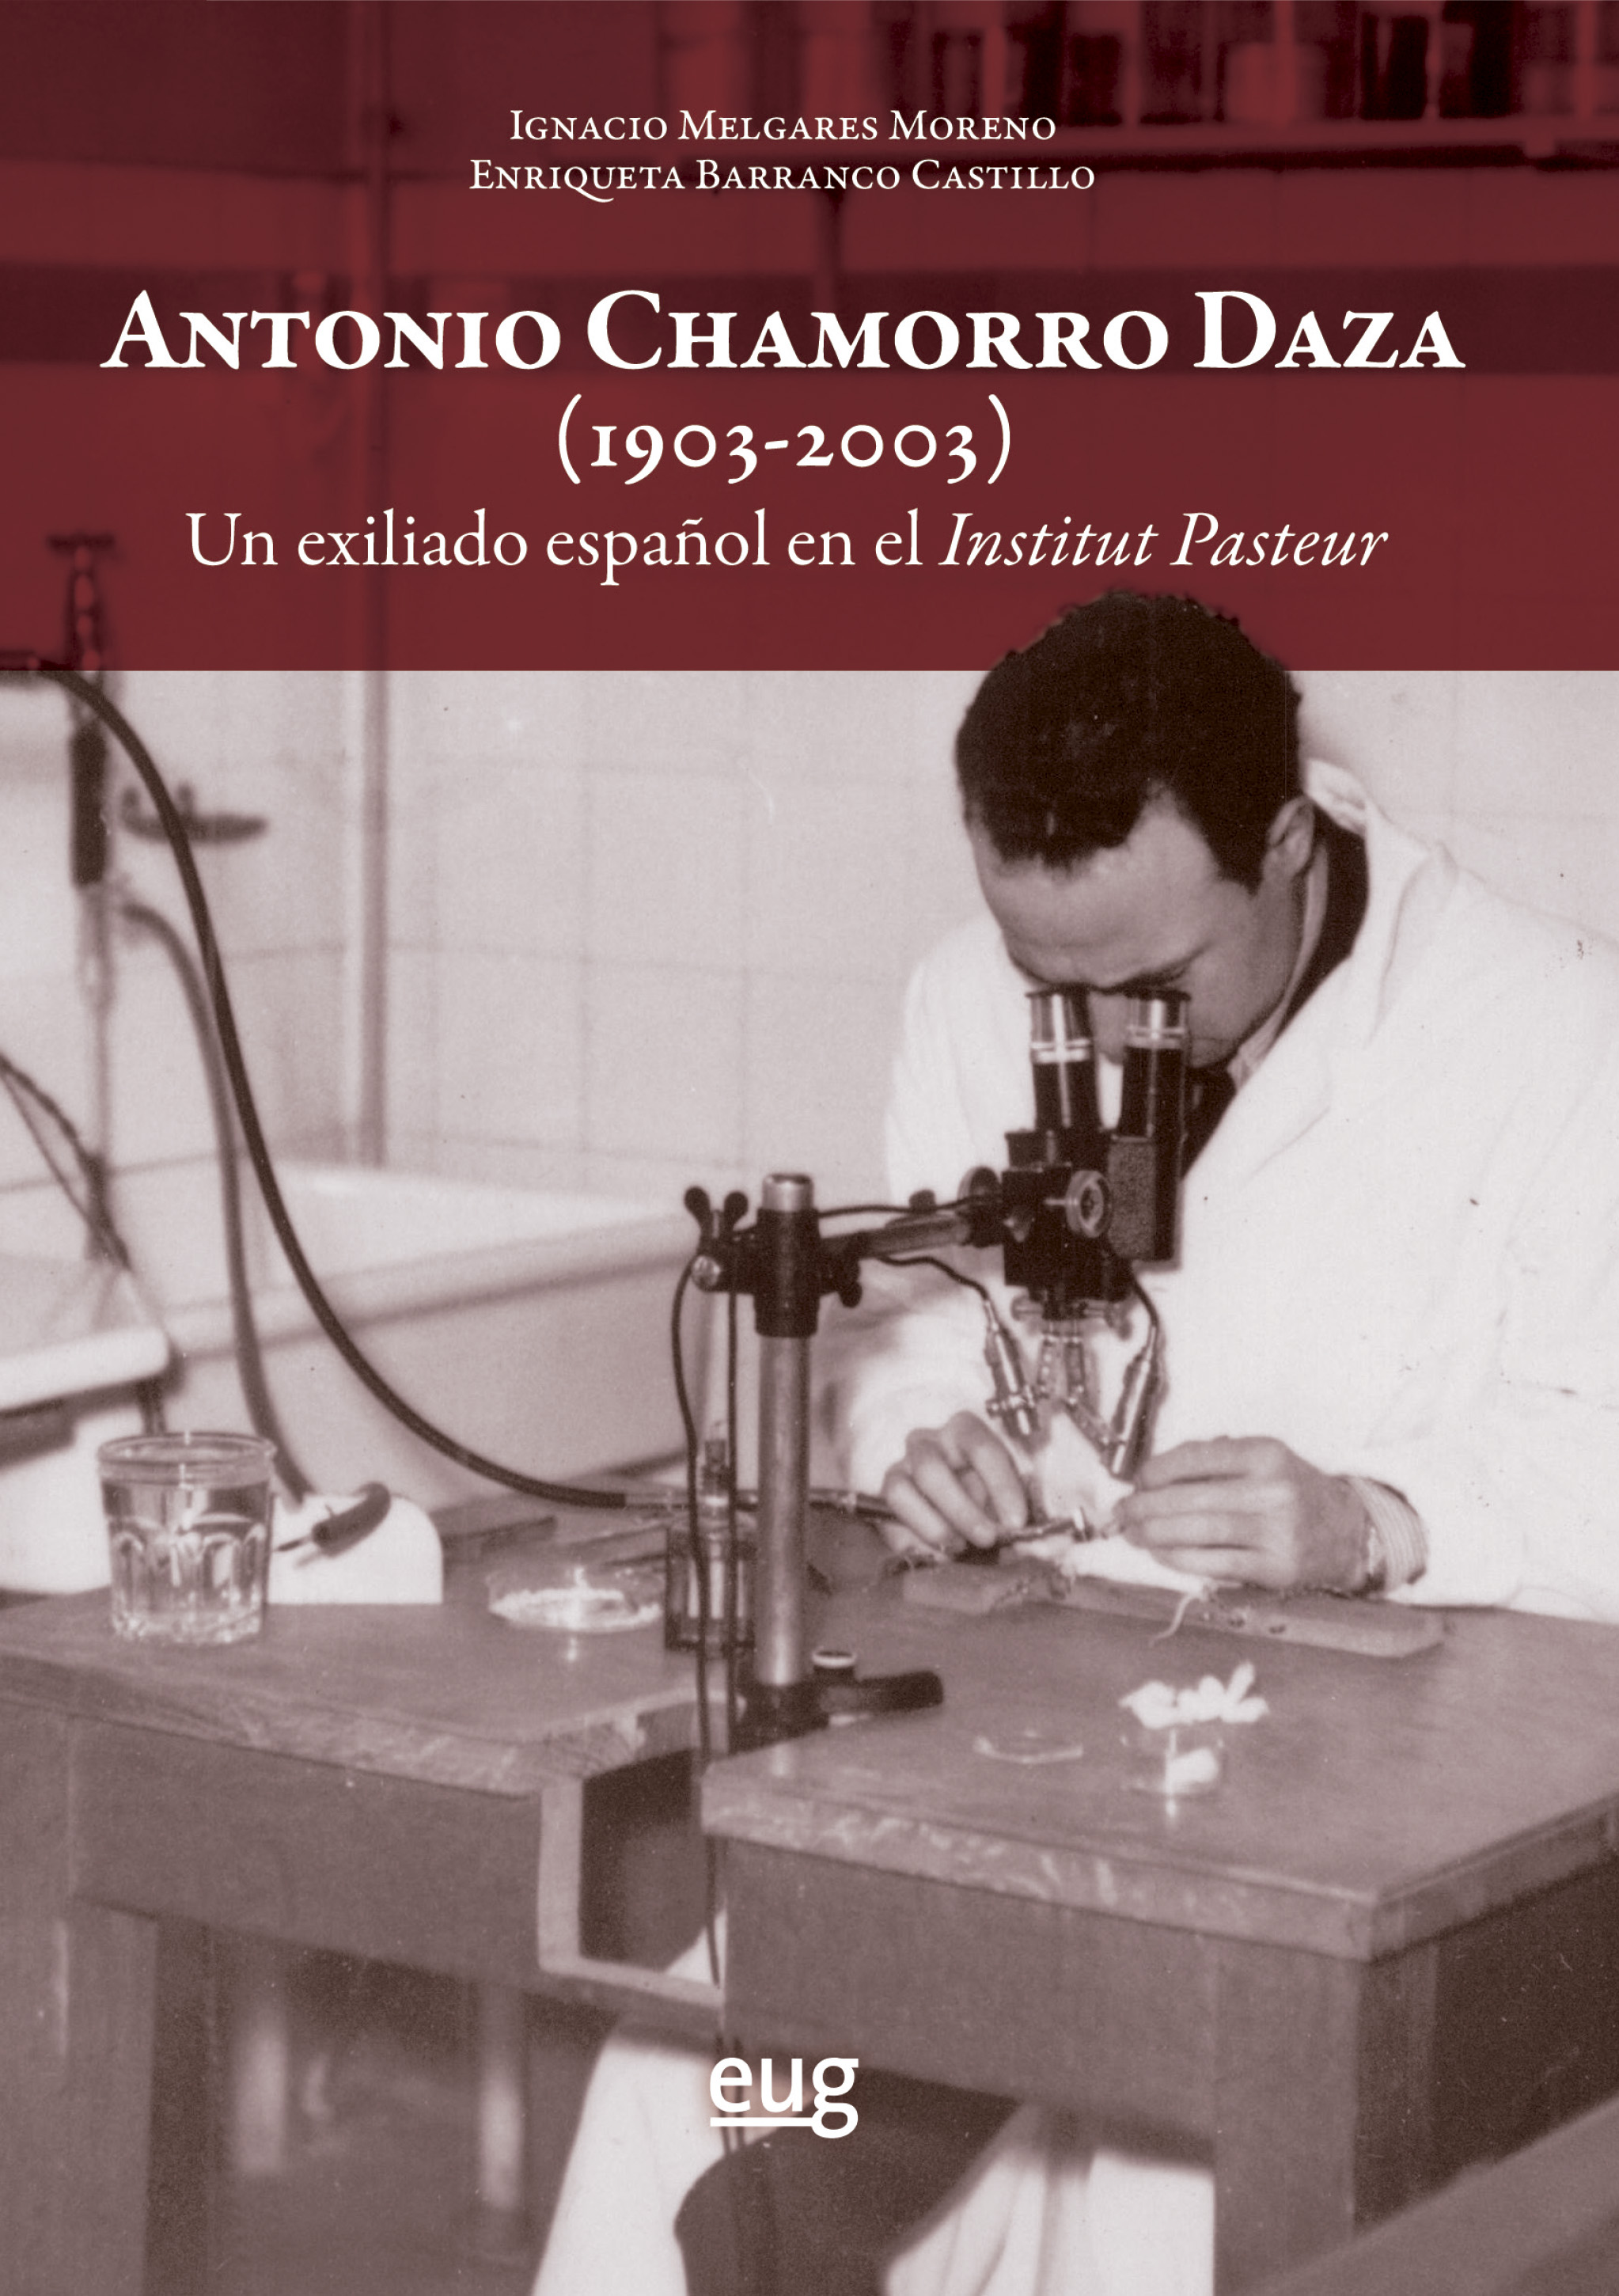 ‘Antonio Chamorro Daza (1903-2003) libro del mes de julio